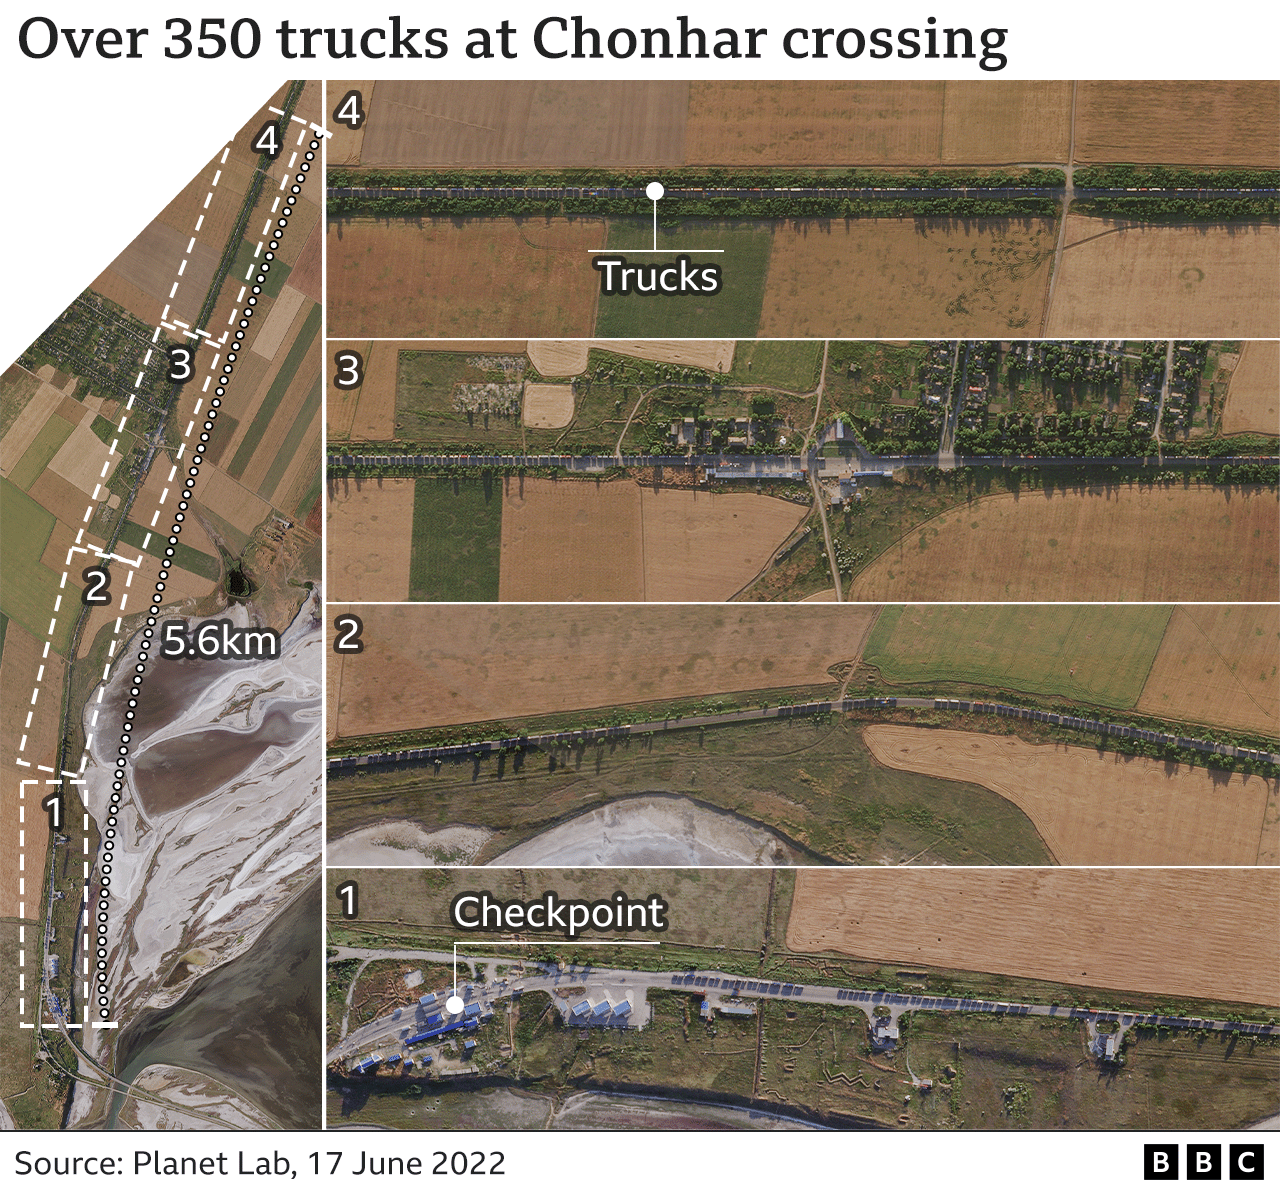 Satellite image of Chonhar border crossing showing over 350 trucks entering Crimea